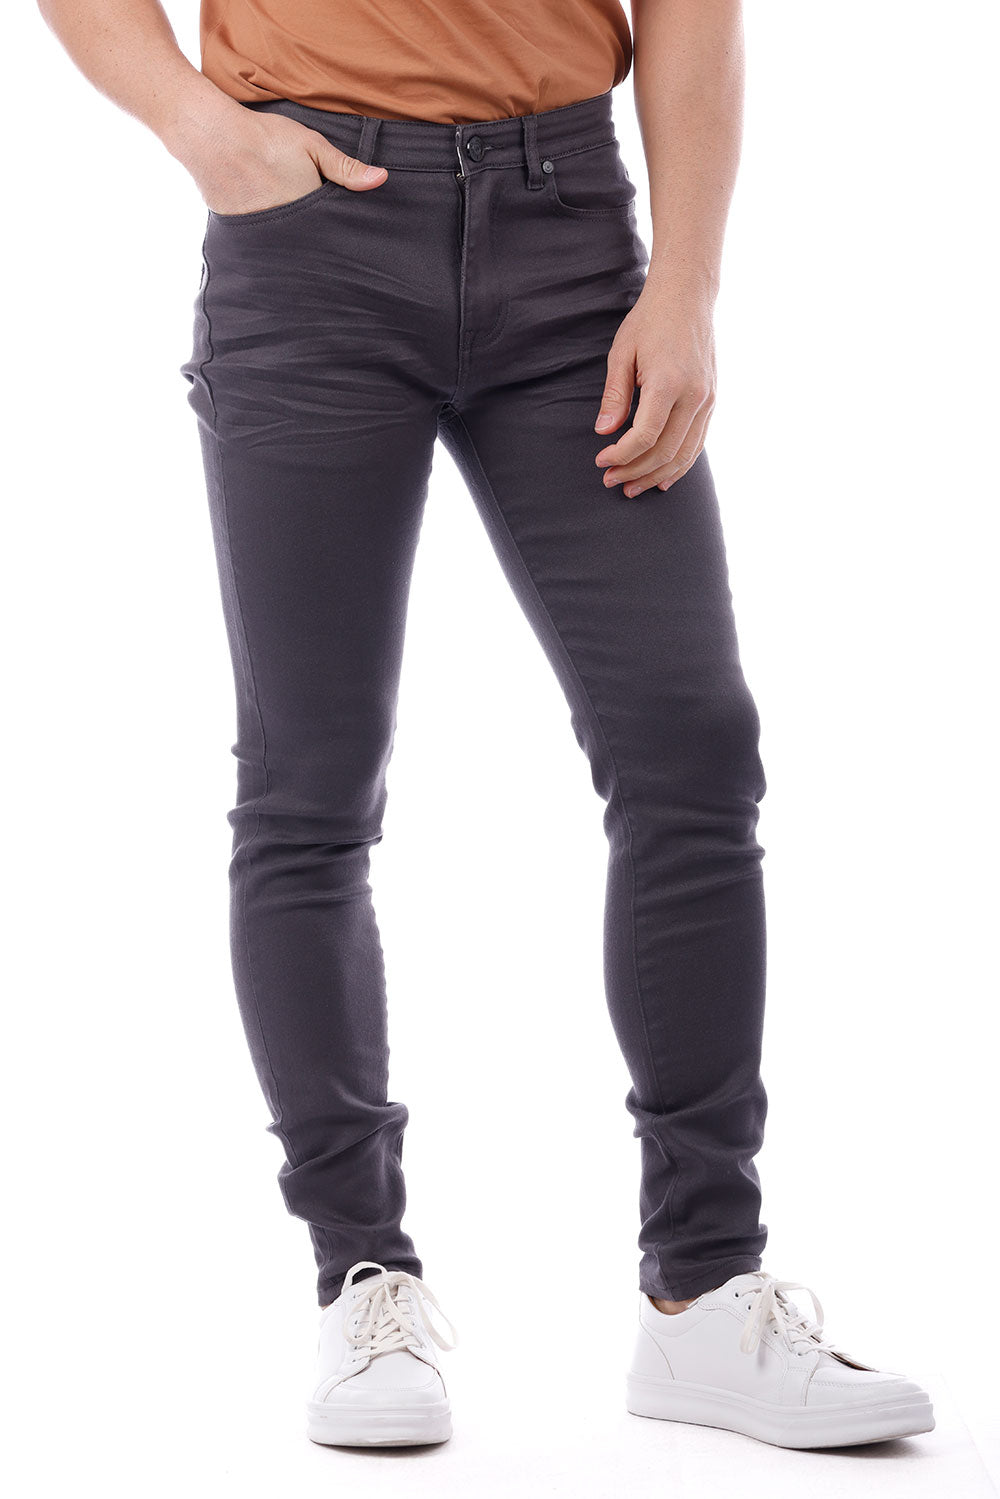 Barabas Men's Skinny Fit Classic Denim Solid Color Jeans 1700 Charcoal